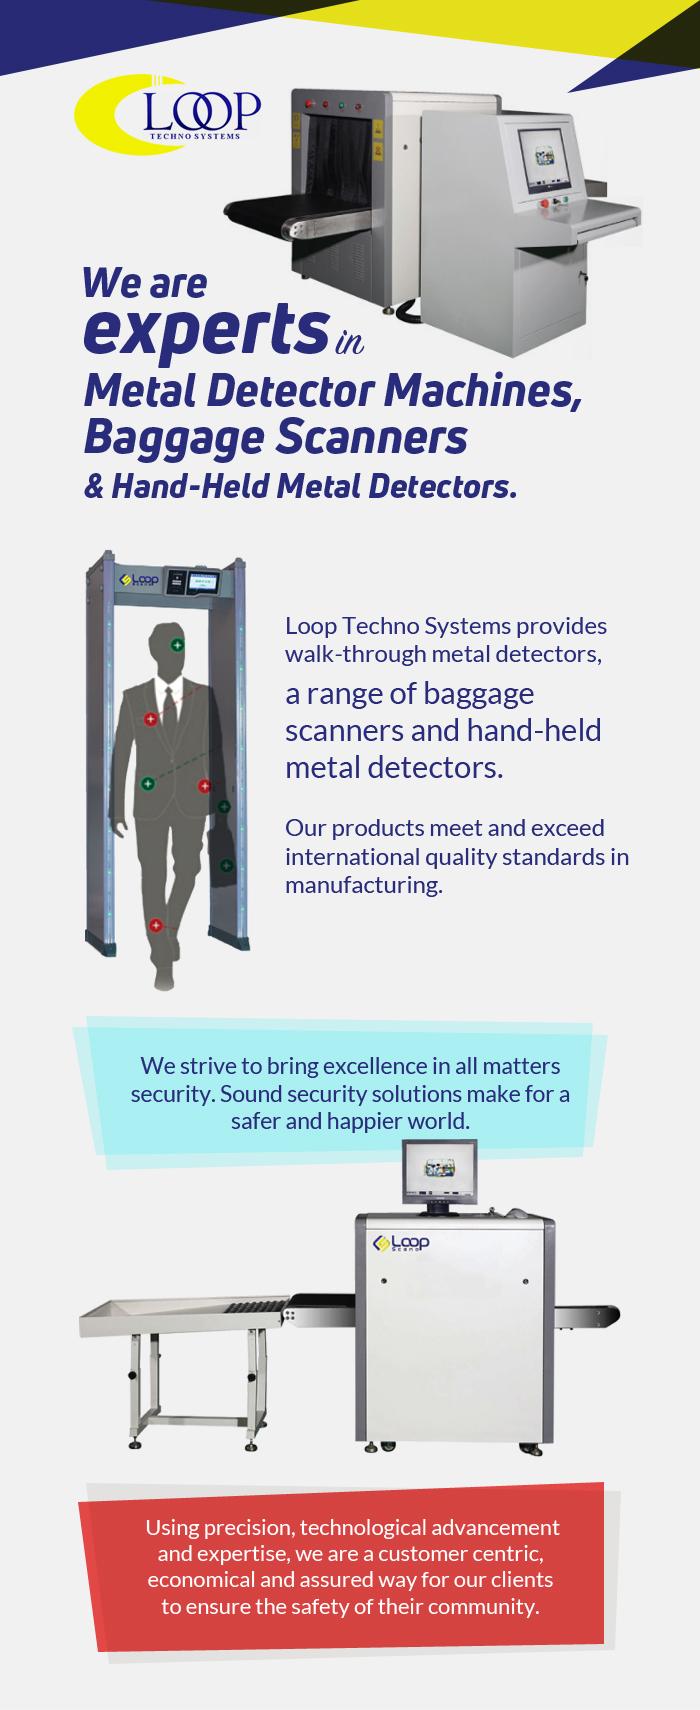 Get Metal Detectors, Baggage Scanners at Loop Techno Systems